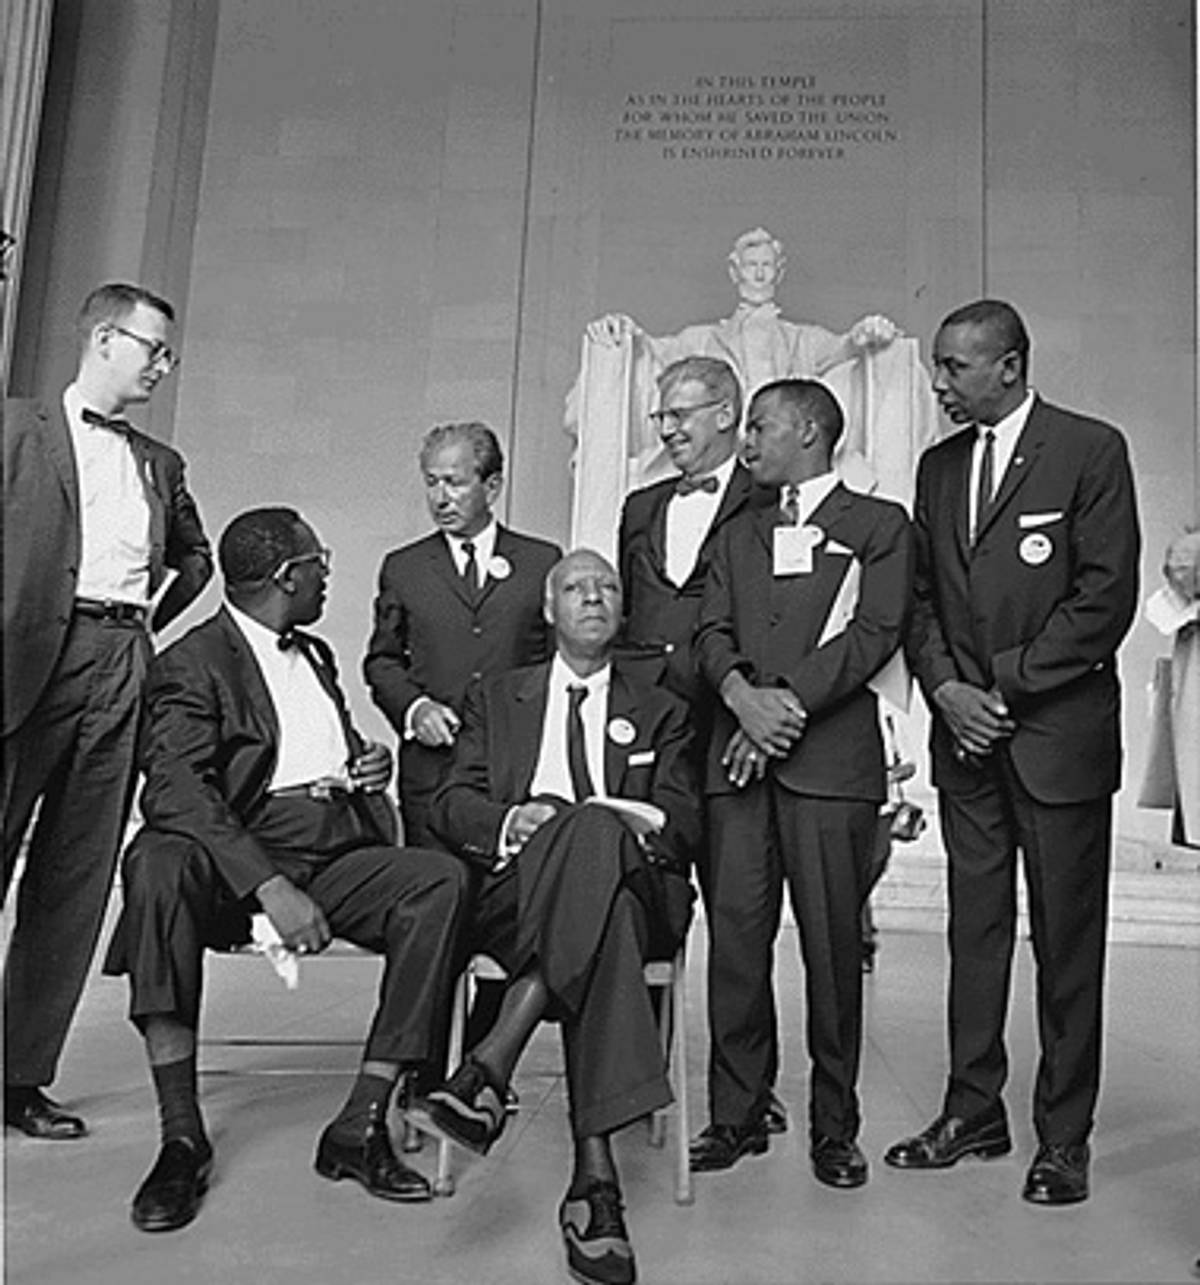 Civil Rights March on Washington, D.C.: Mathew Ahmann, Cleveland Robinson, Rabbi Joachim Prinz, A. Philip Randolph, Joseph Rauh, Jr, John Lewis, Floyd McKissick, August 28, 1963.